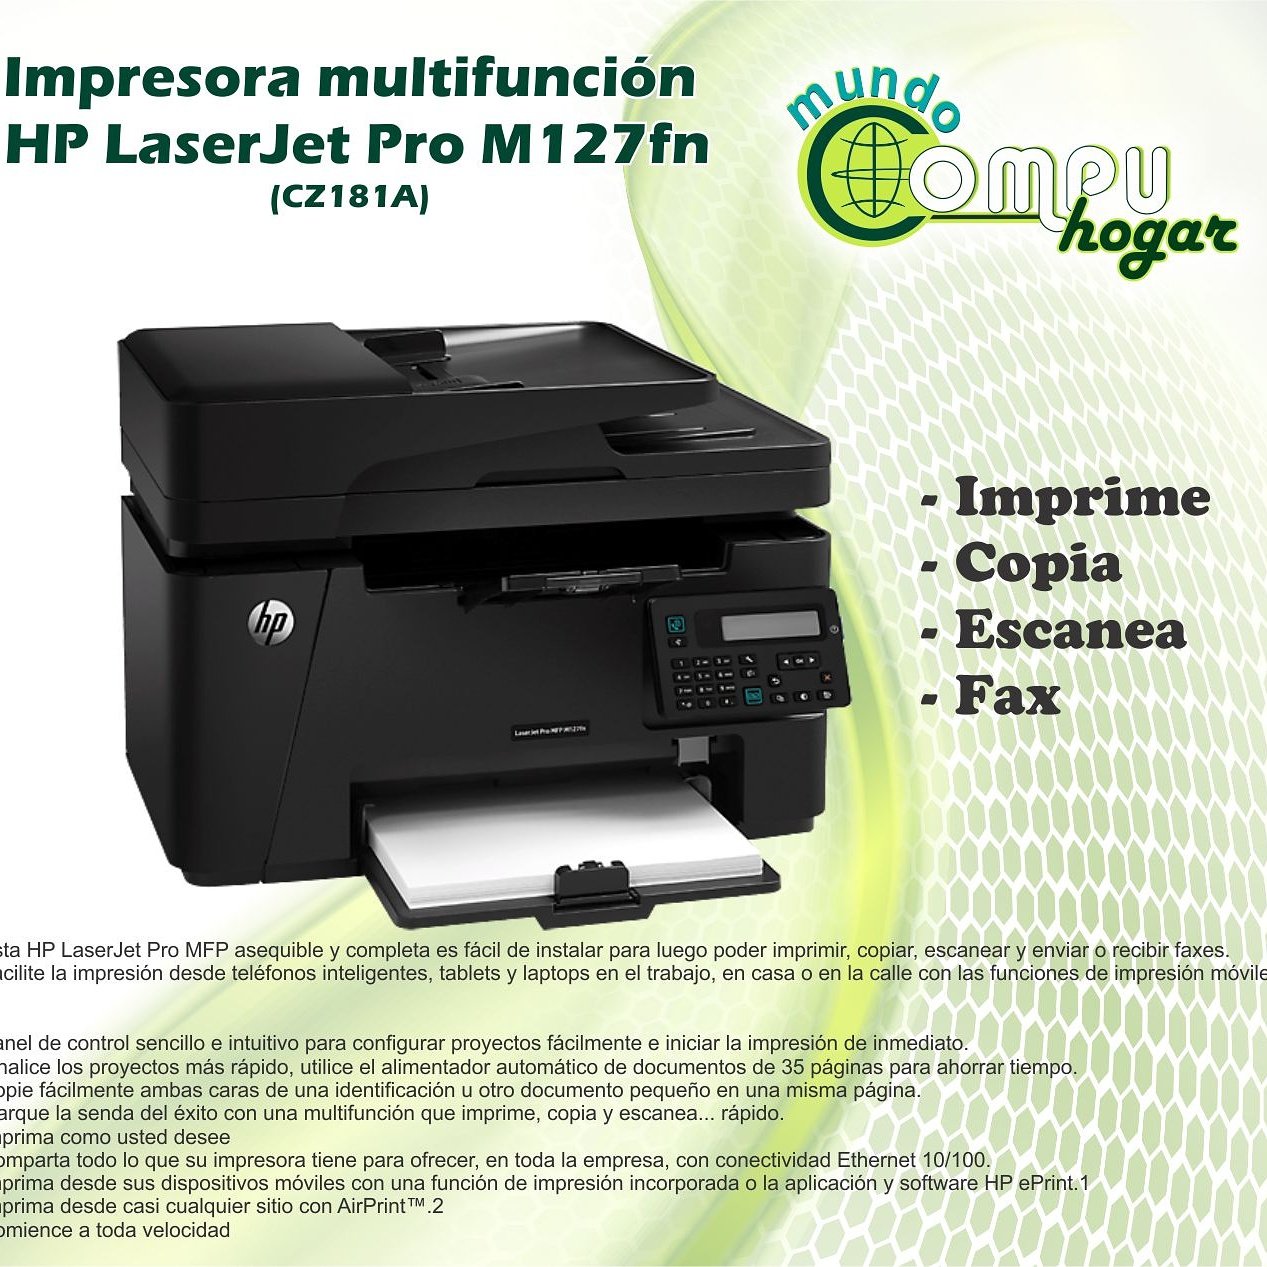 Mundo CompuHogar on X: #felizmartes #3demayo #tiendafisica #impresora #hp  laserjet #pro #impresion #copia #scanner #boleitasur #caracas   / X